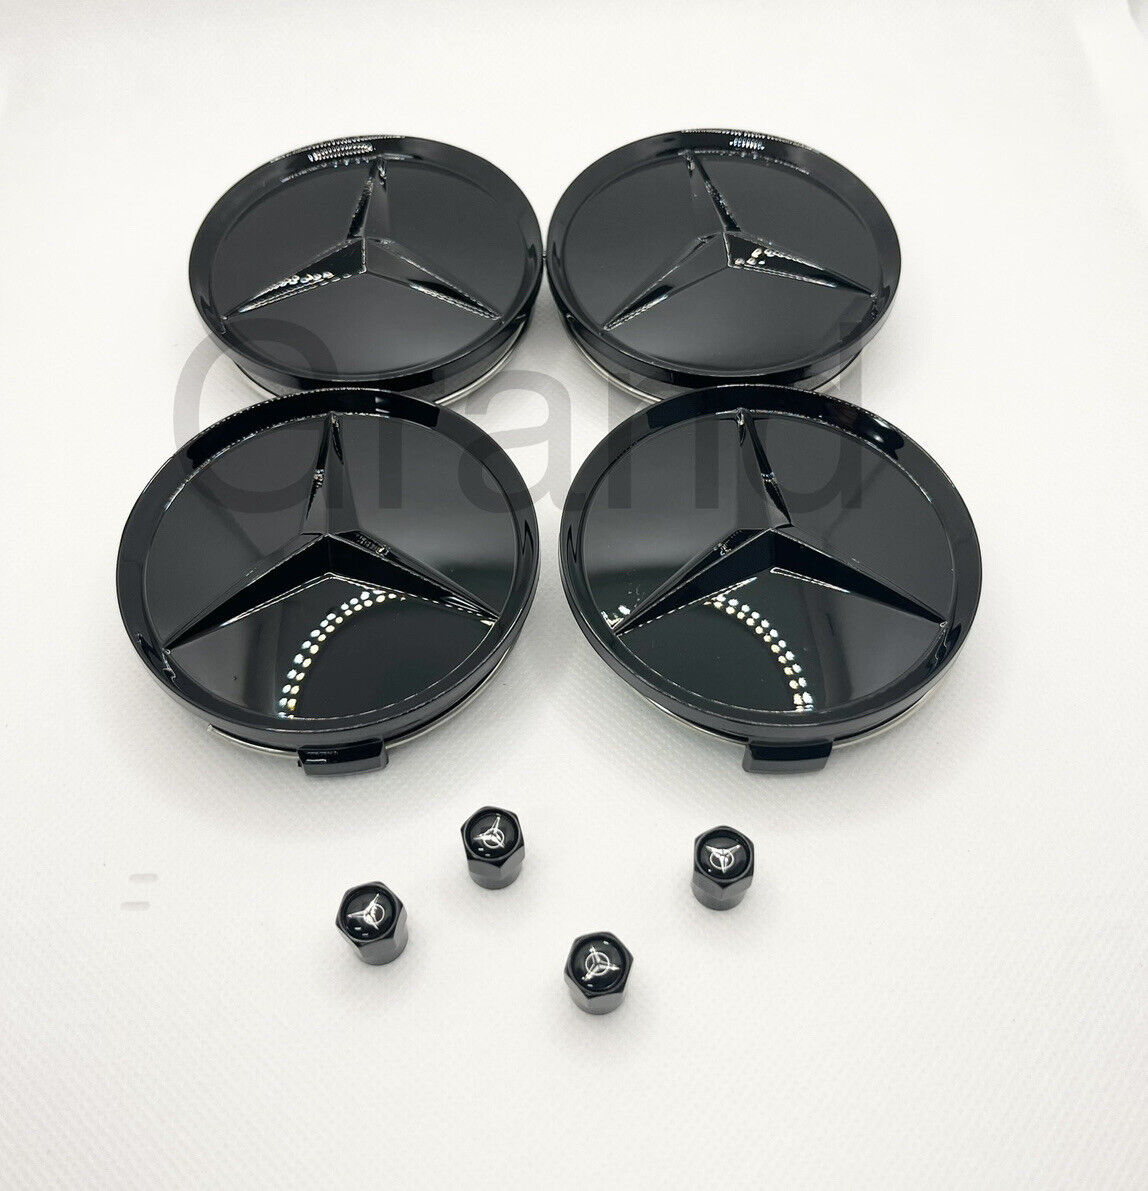 8pc For Mercedes-Benz Wheel Center Cap & Tire Air Valve Cap Set Gloss Black 75mm